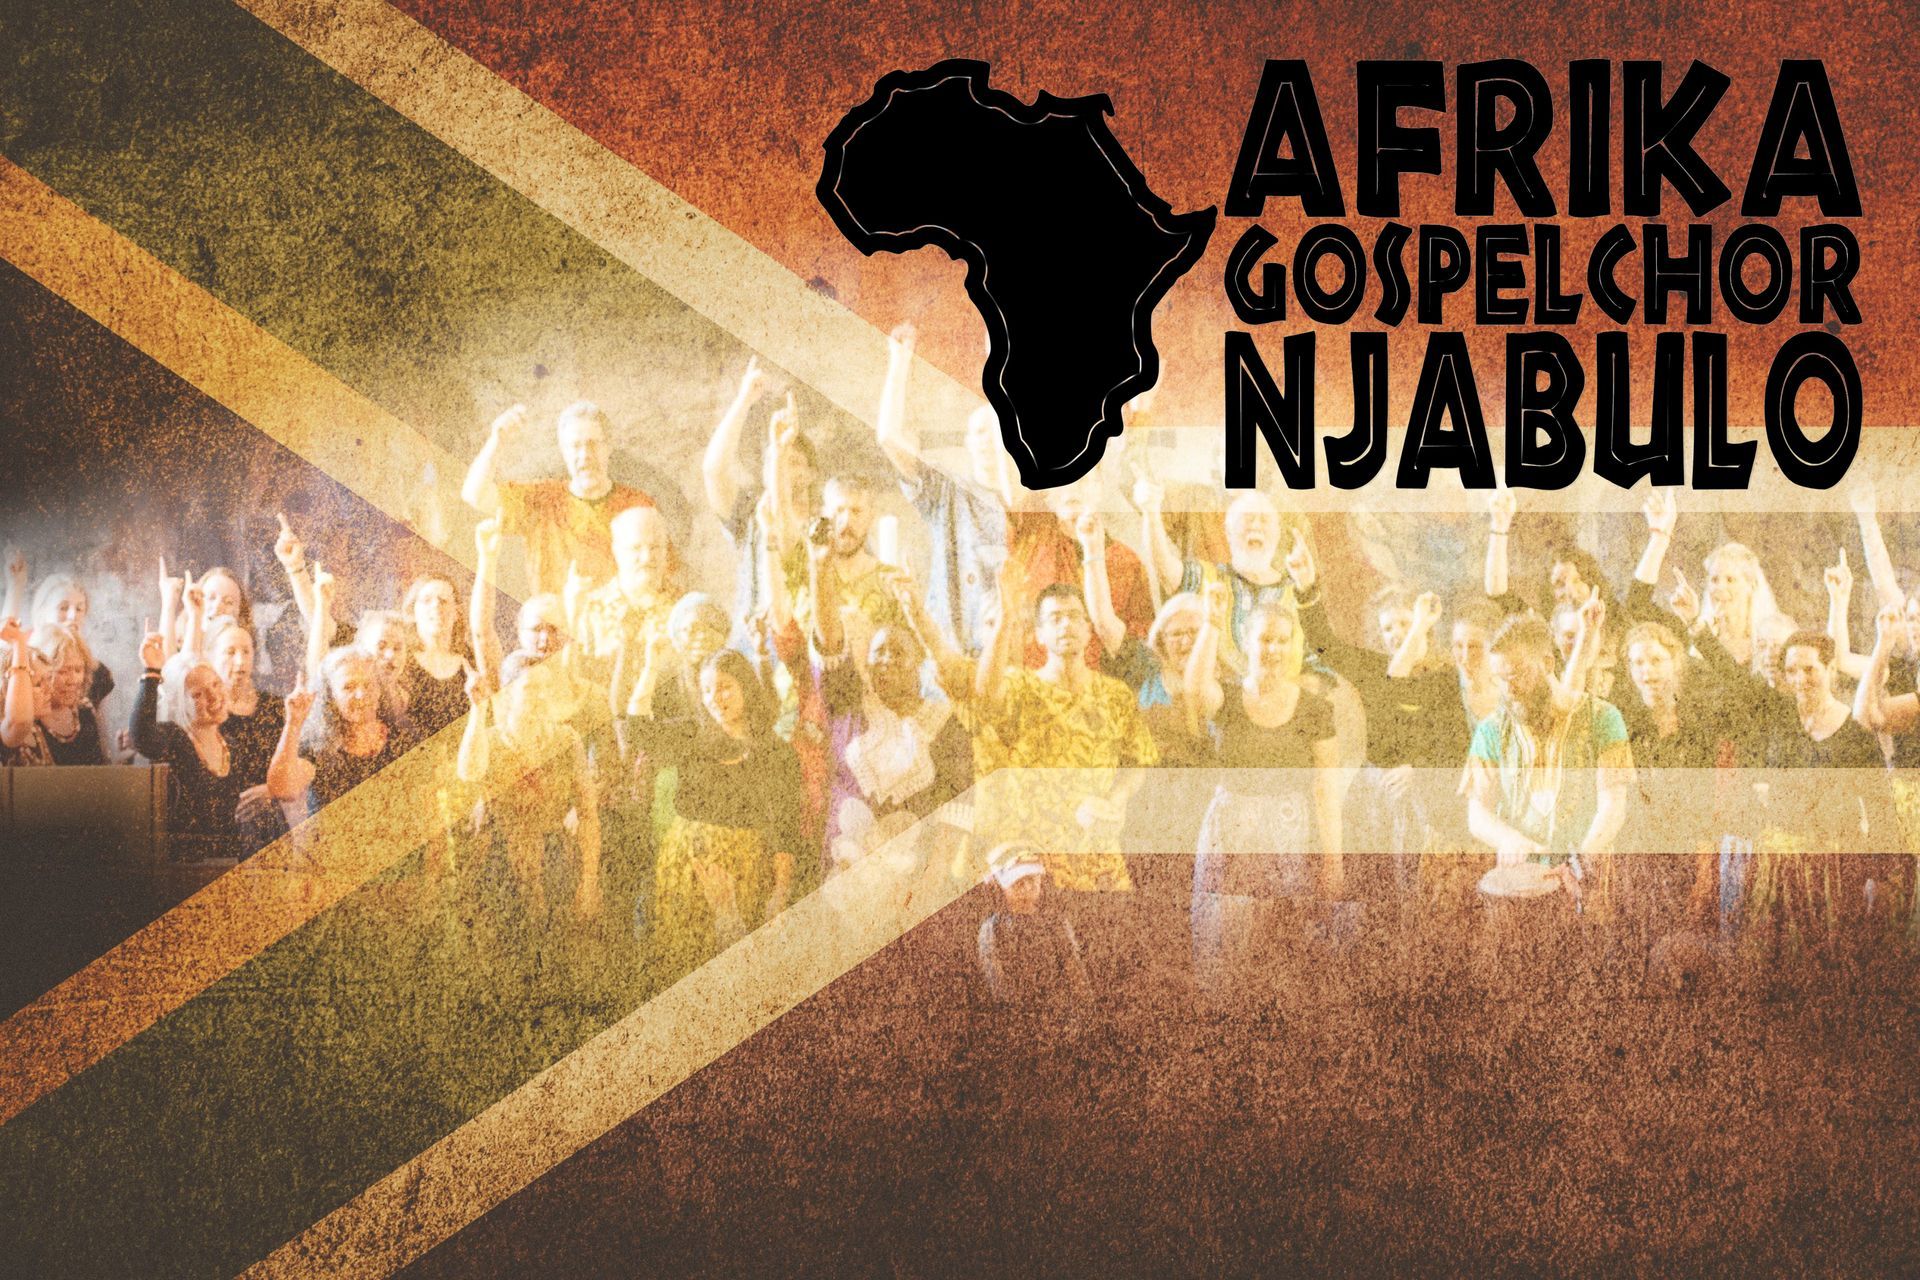 Der Afrika-Gospelchor Njabulo singt sein drittes Gospelkonzert in der Timotheuskirche in Osnabrück.